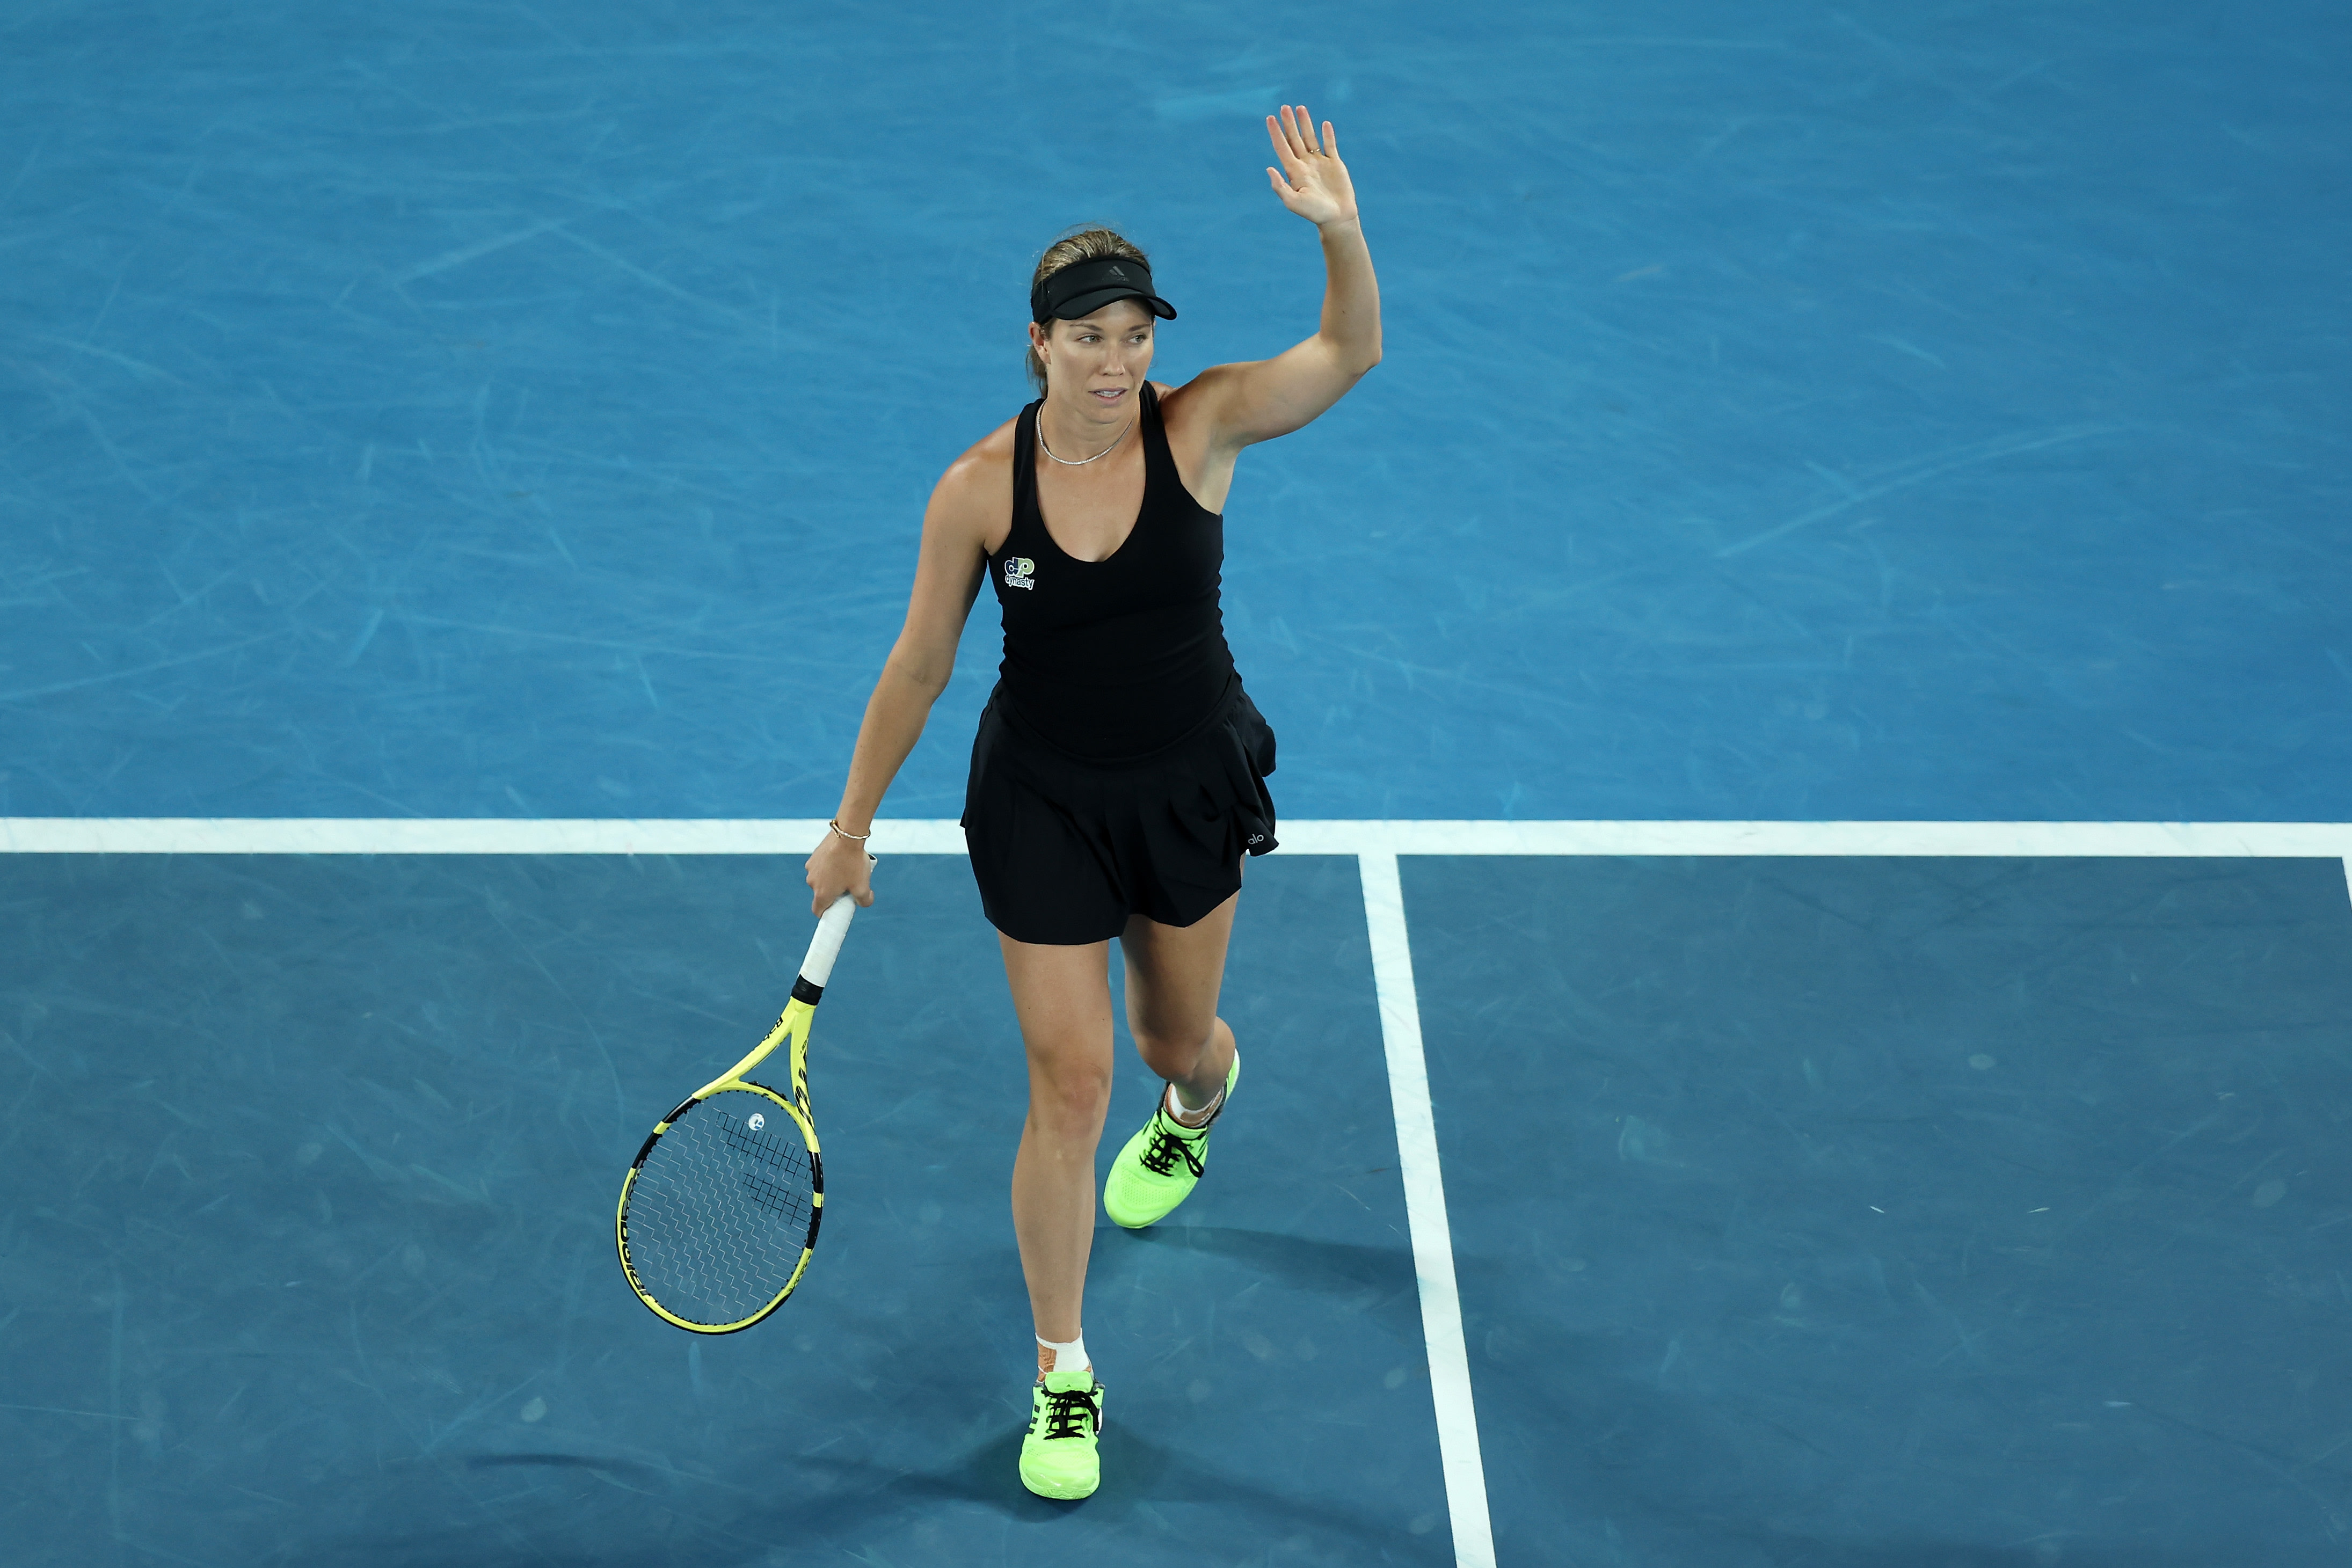 Still Standing Danielle Collins books first major final at Australian Open after Iga Swiatek domination